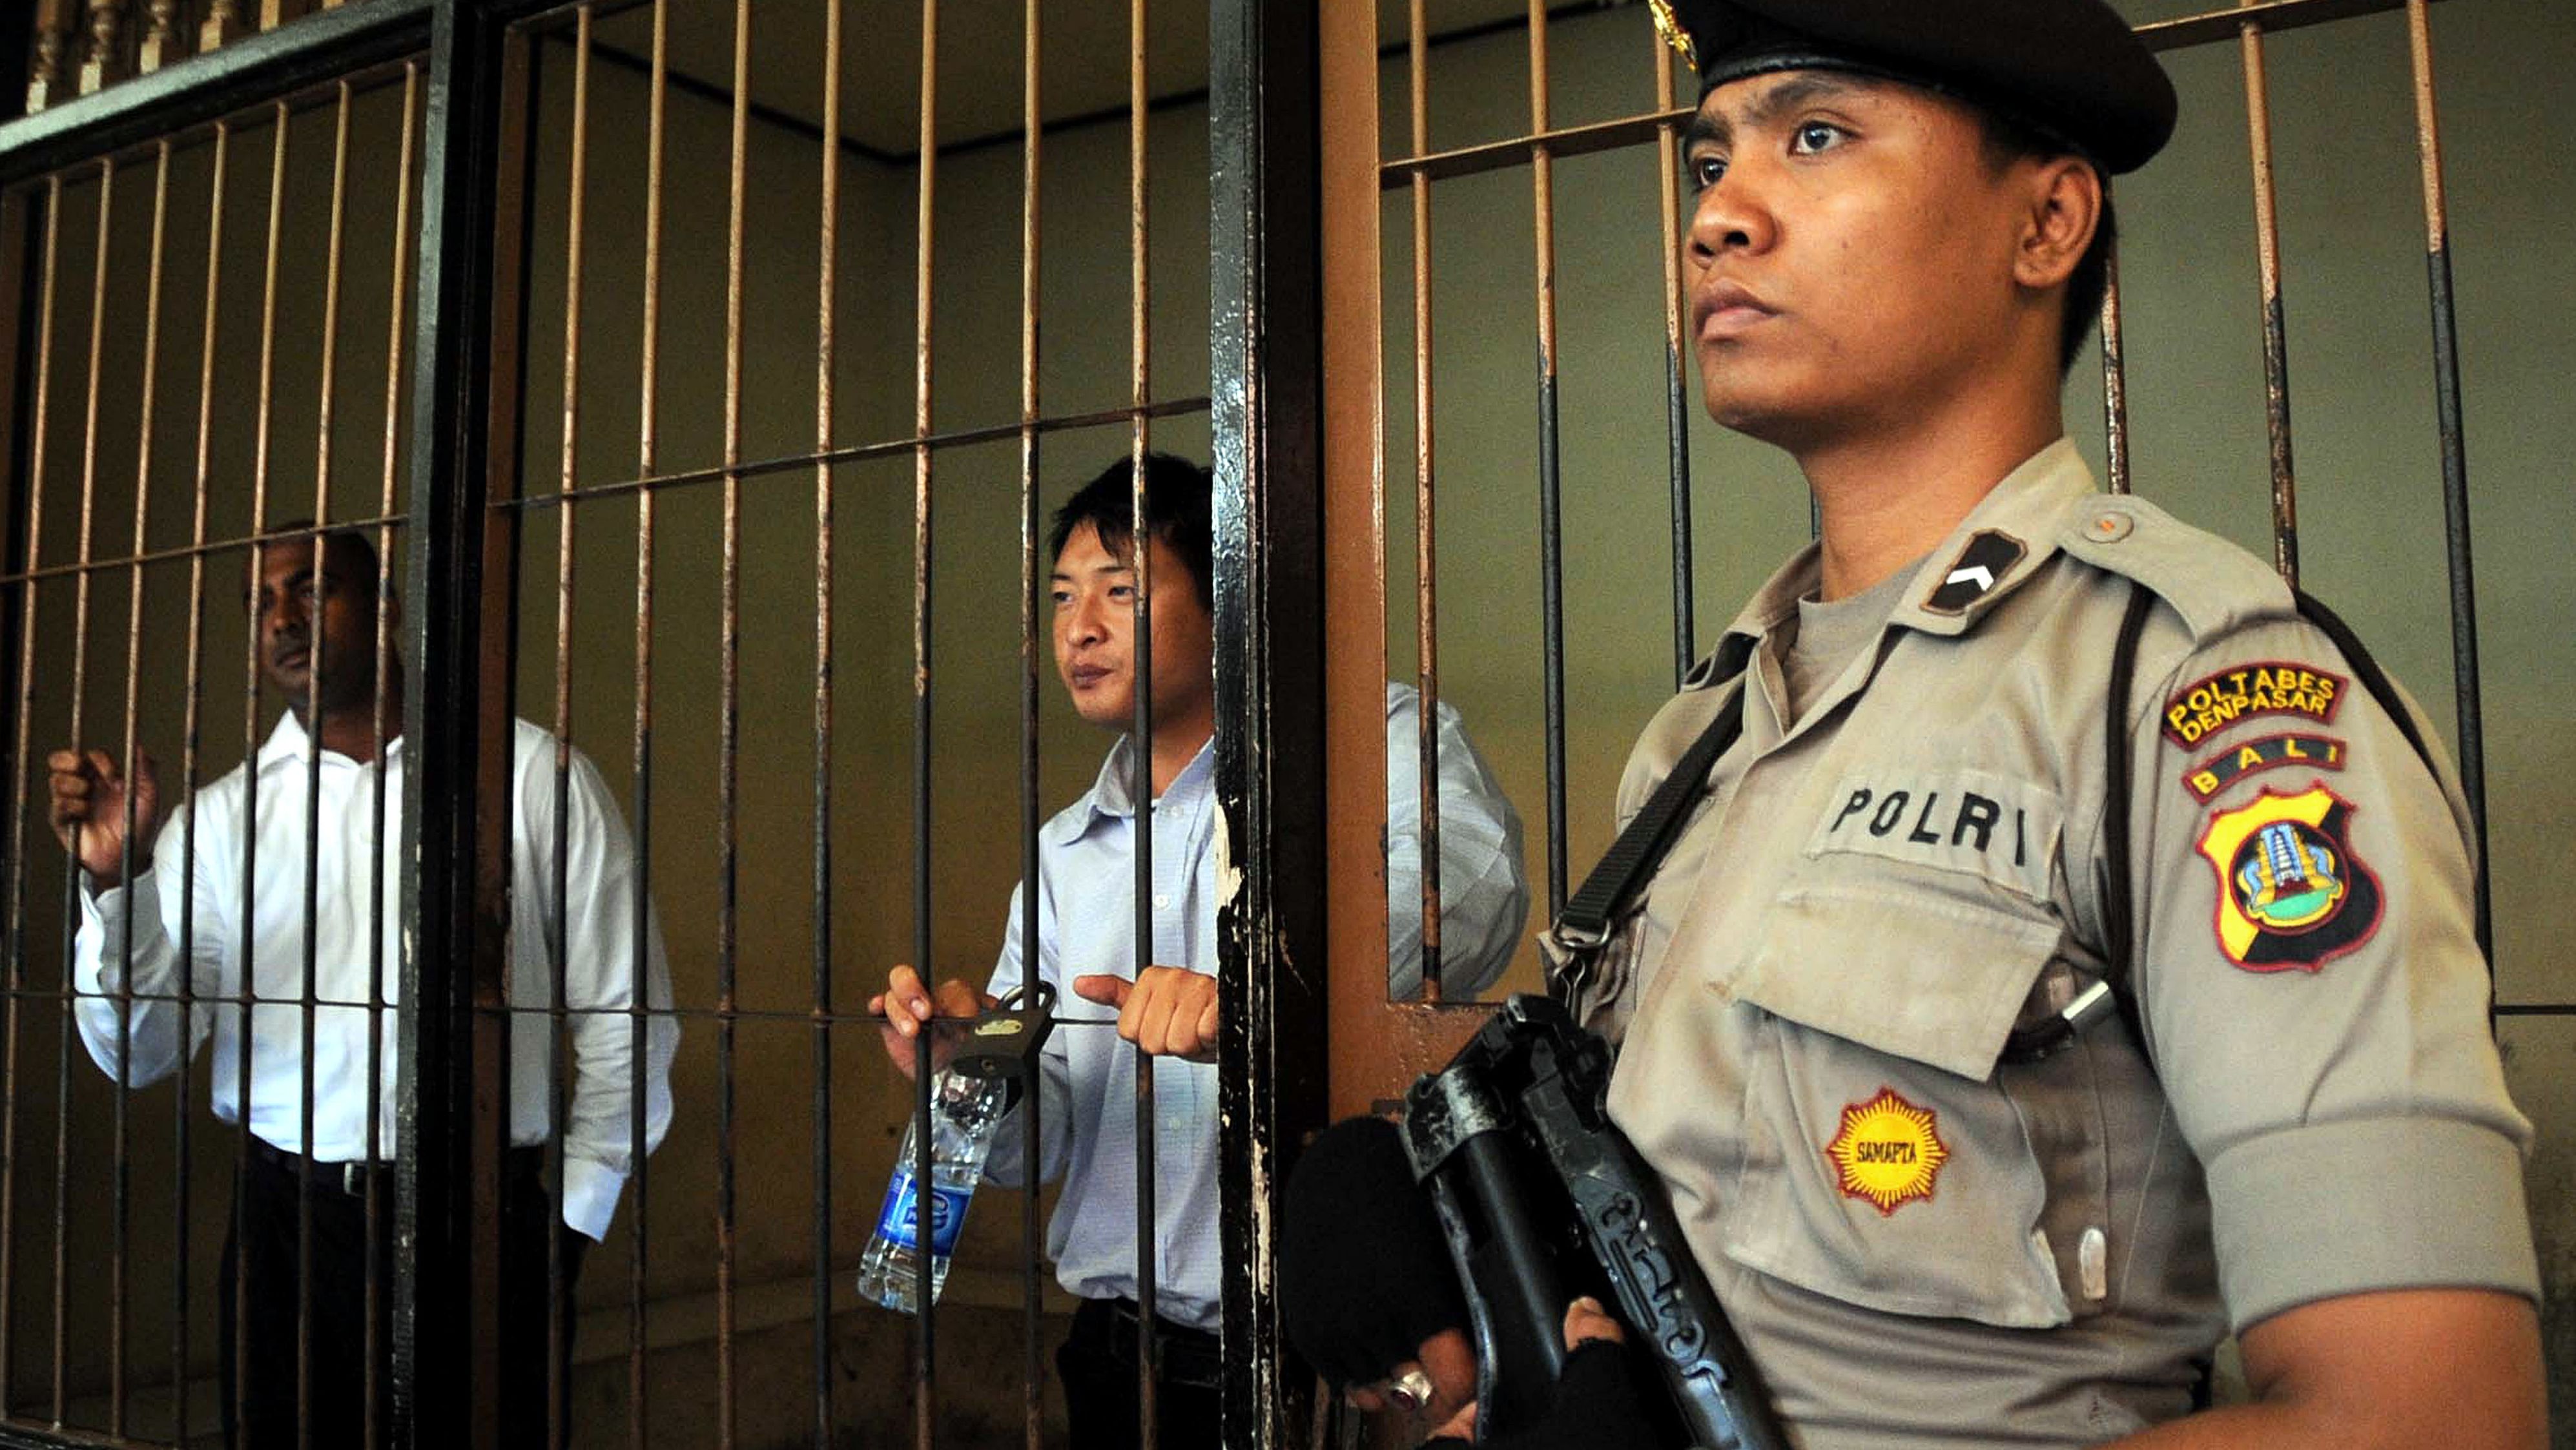 Australians Myuran Sukumaran, left, and Andrew Chan, center, part of the "Bali Nine" await trial in 2010 in Bali. 